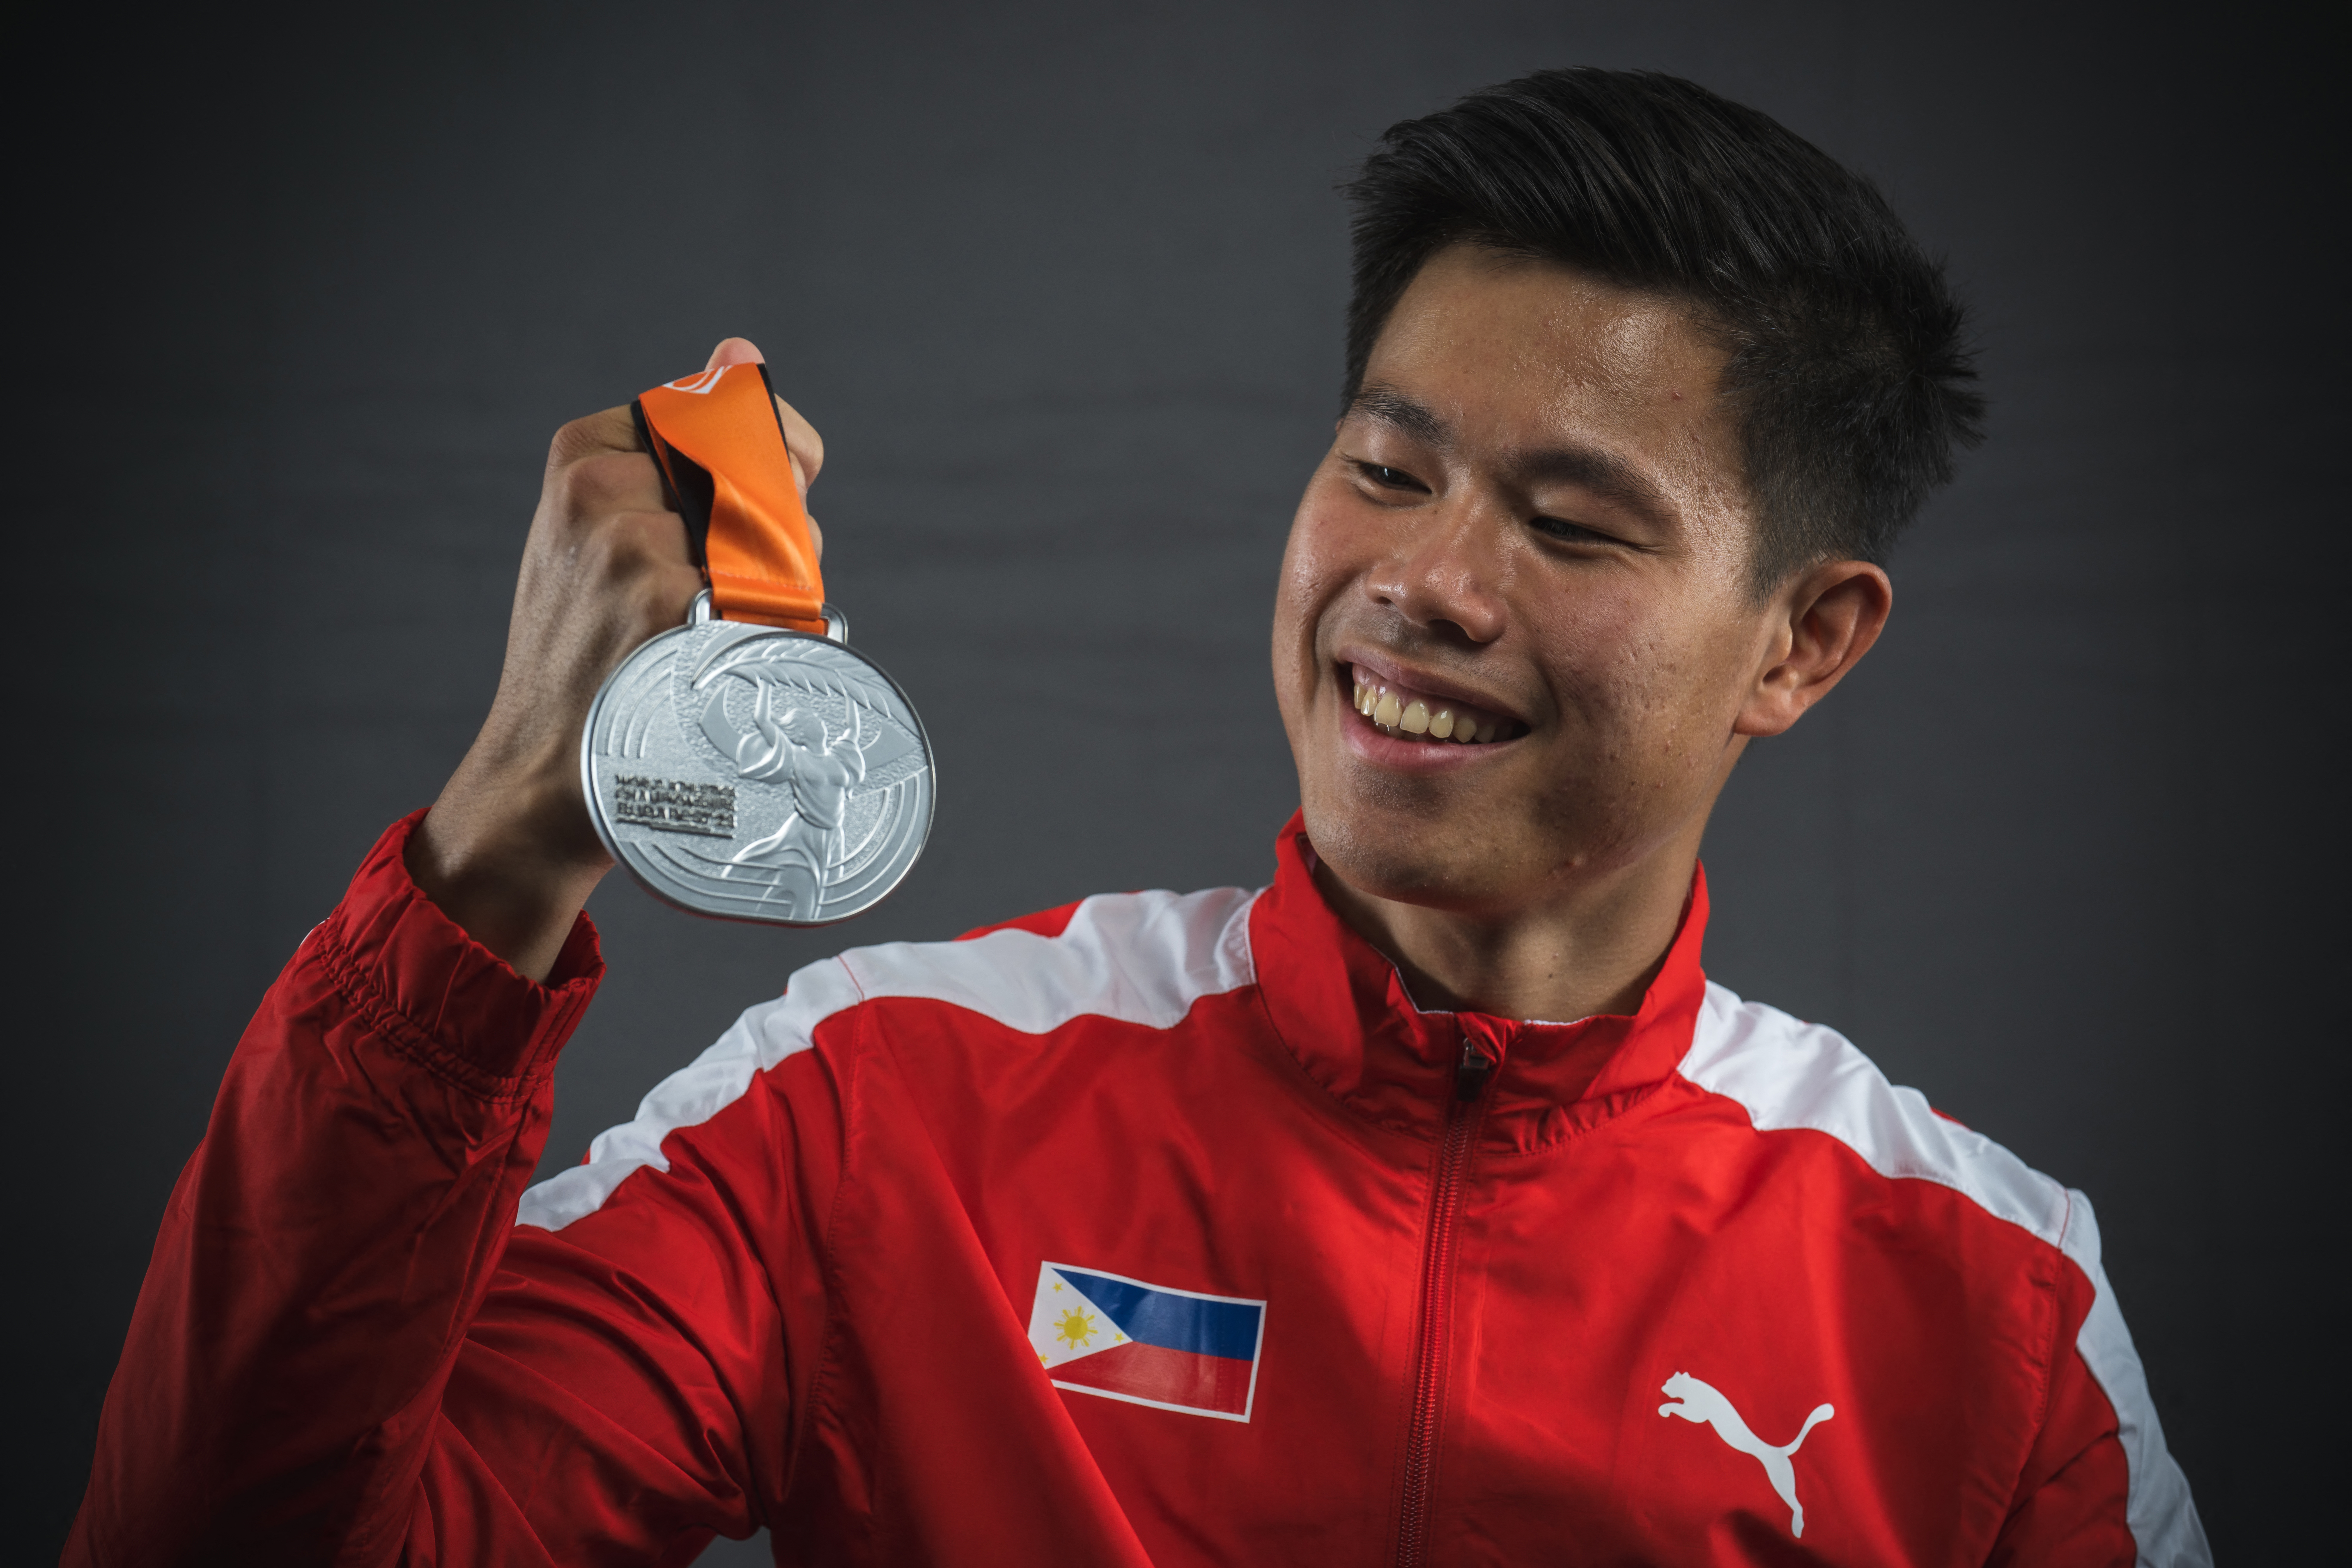 Men's pole vault silver medalist Philippines' Ernest John Obiena 